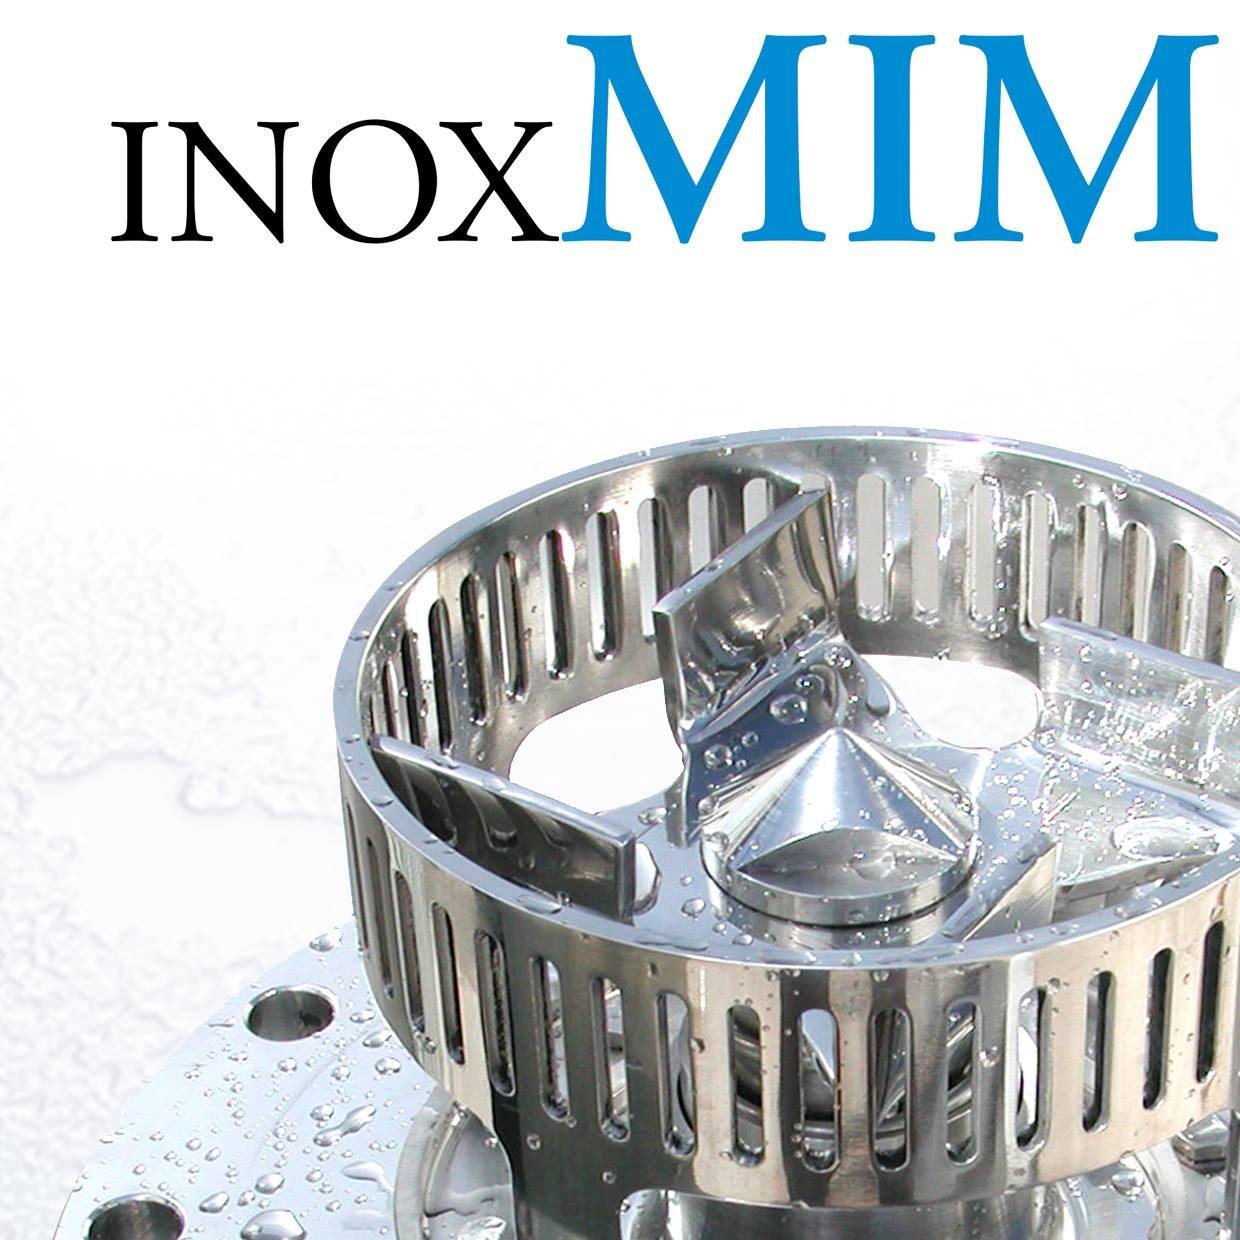 inoxmim group logo